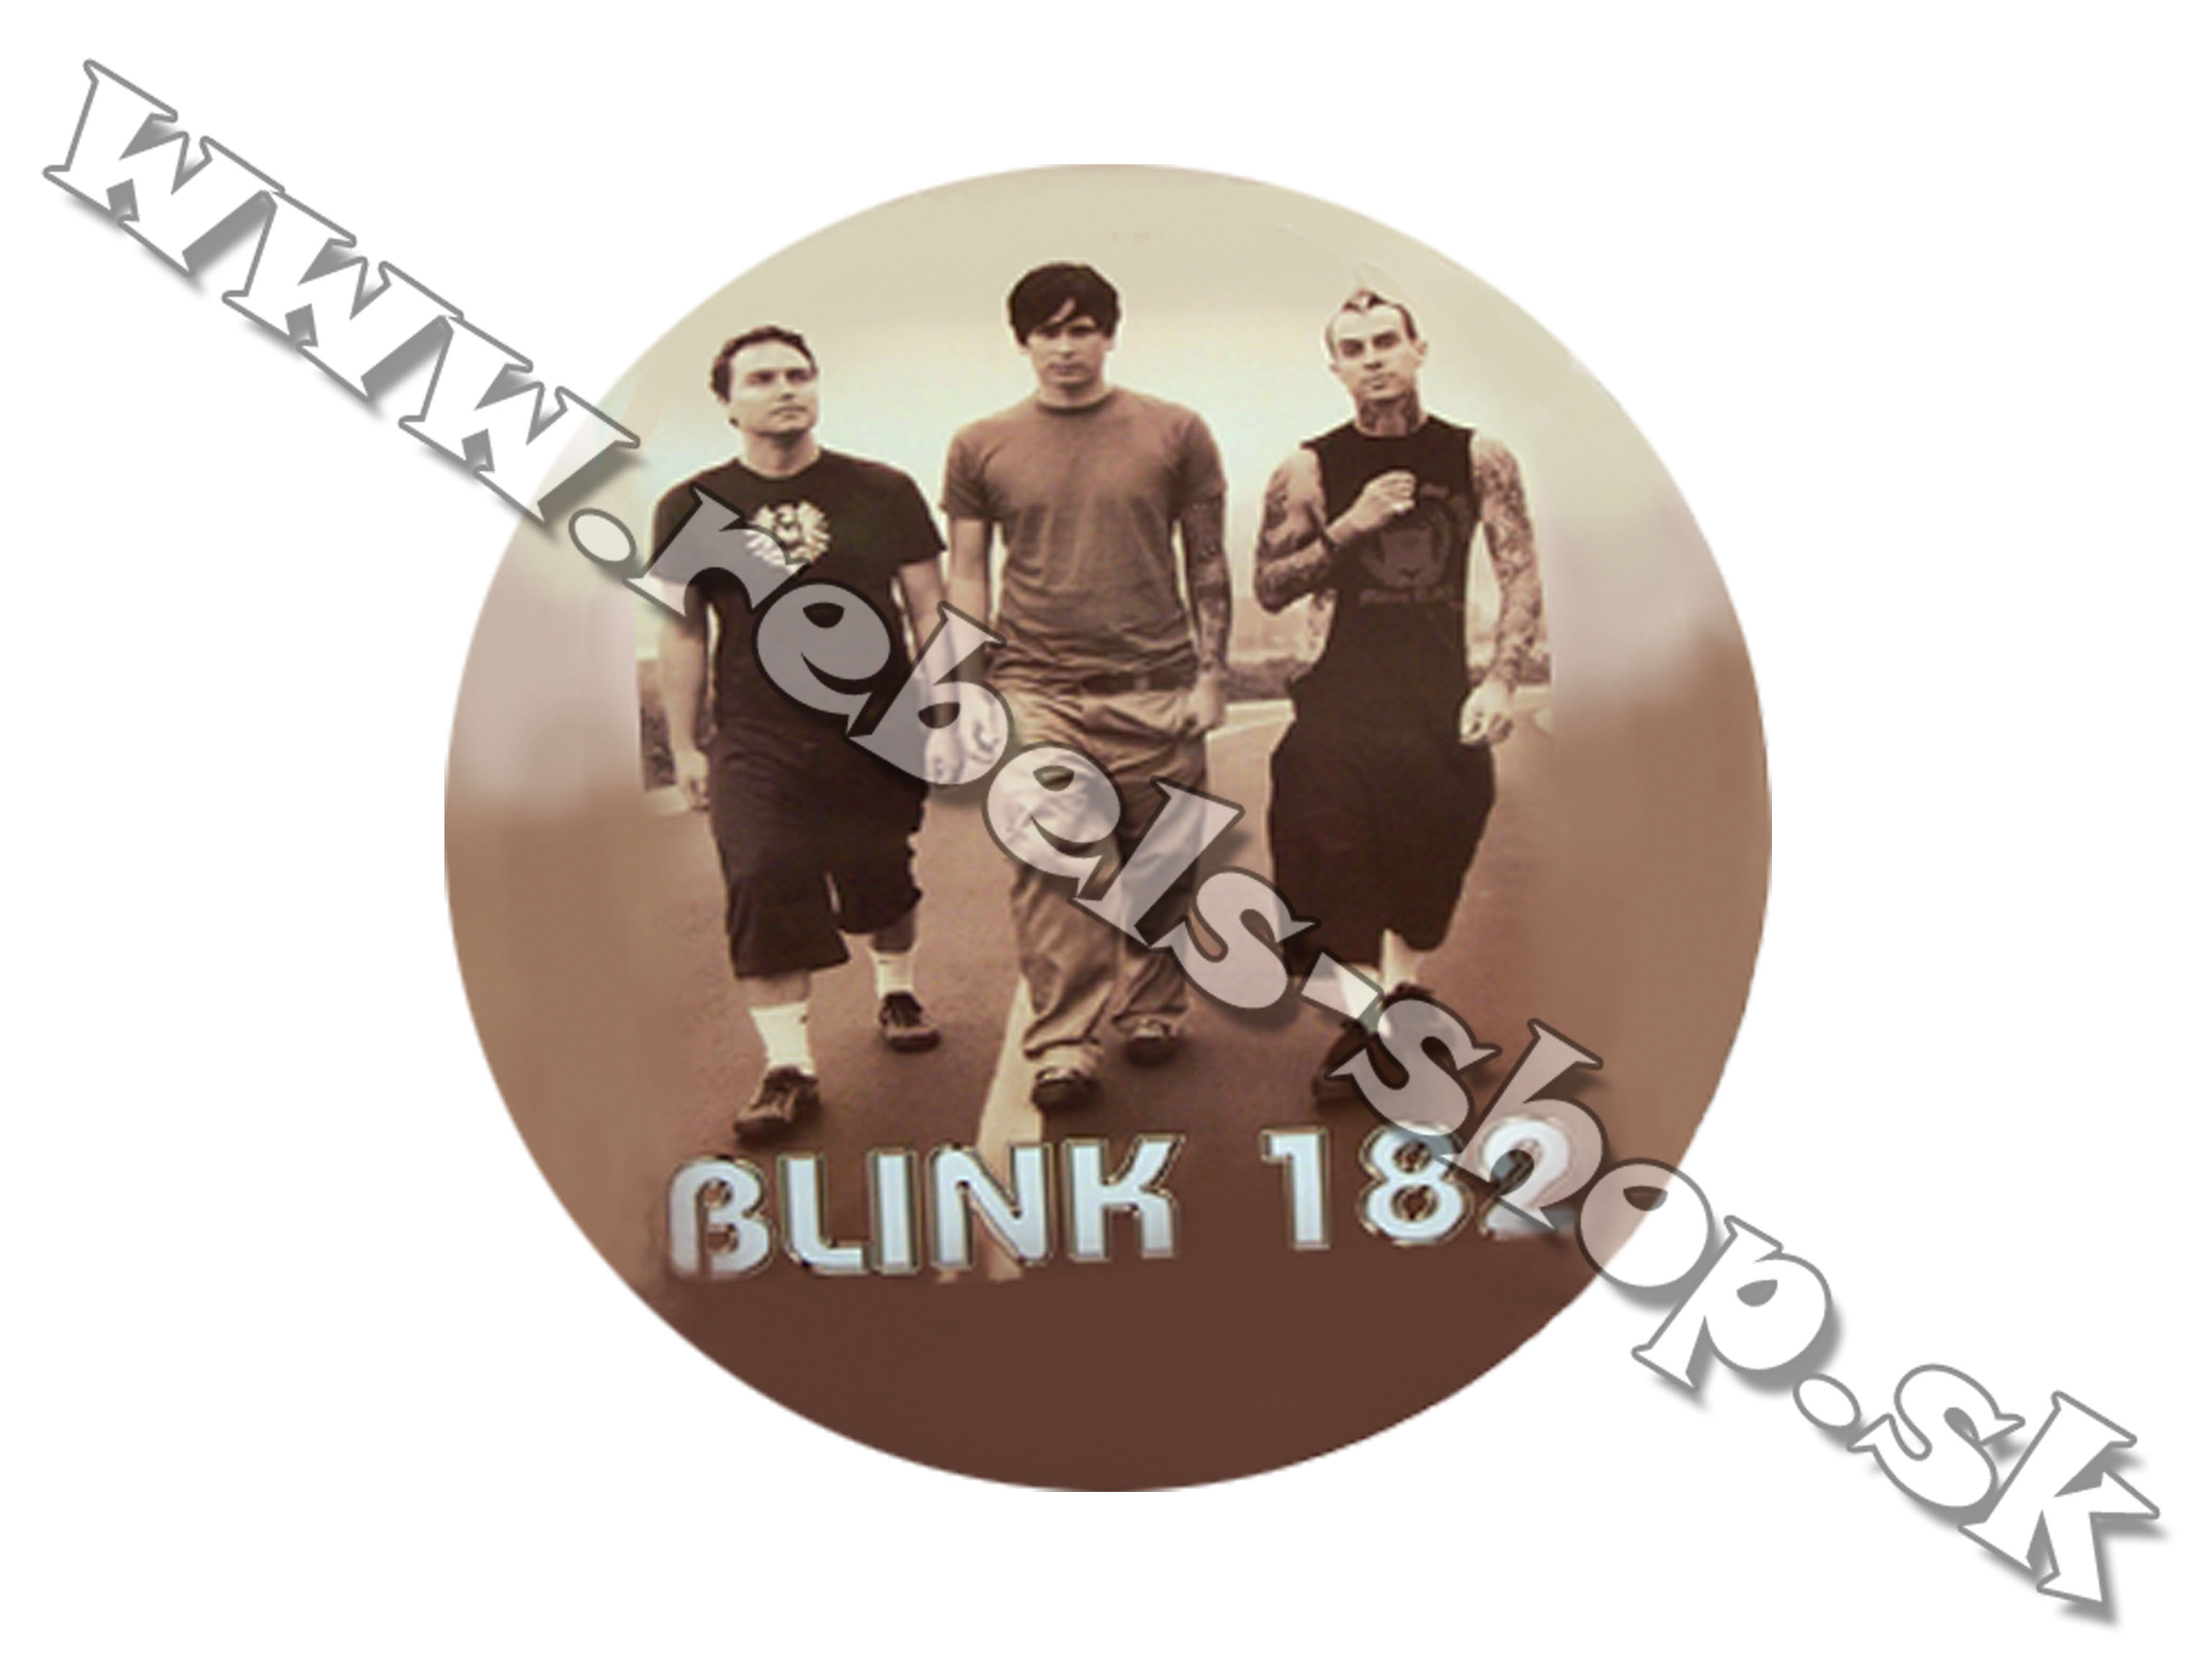 Odznak "Blink 182"